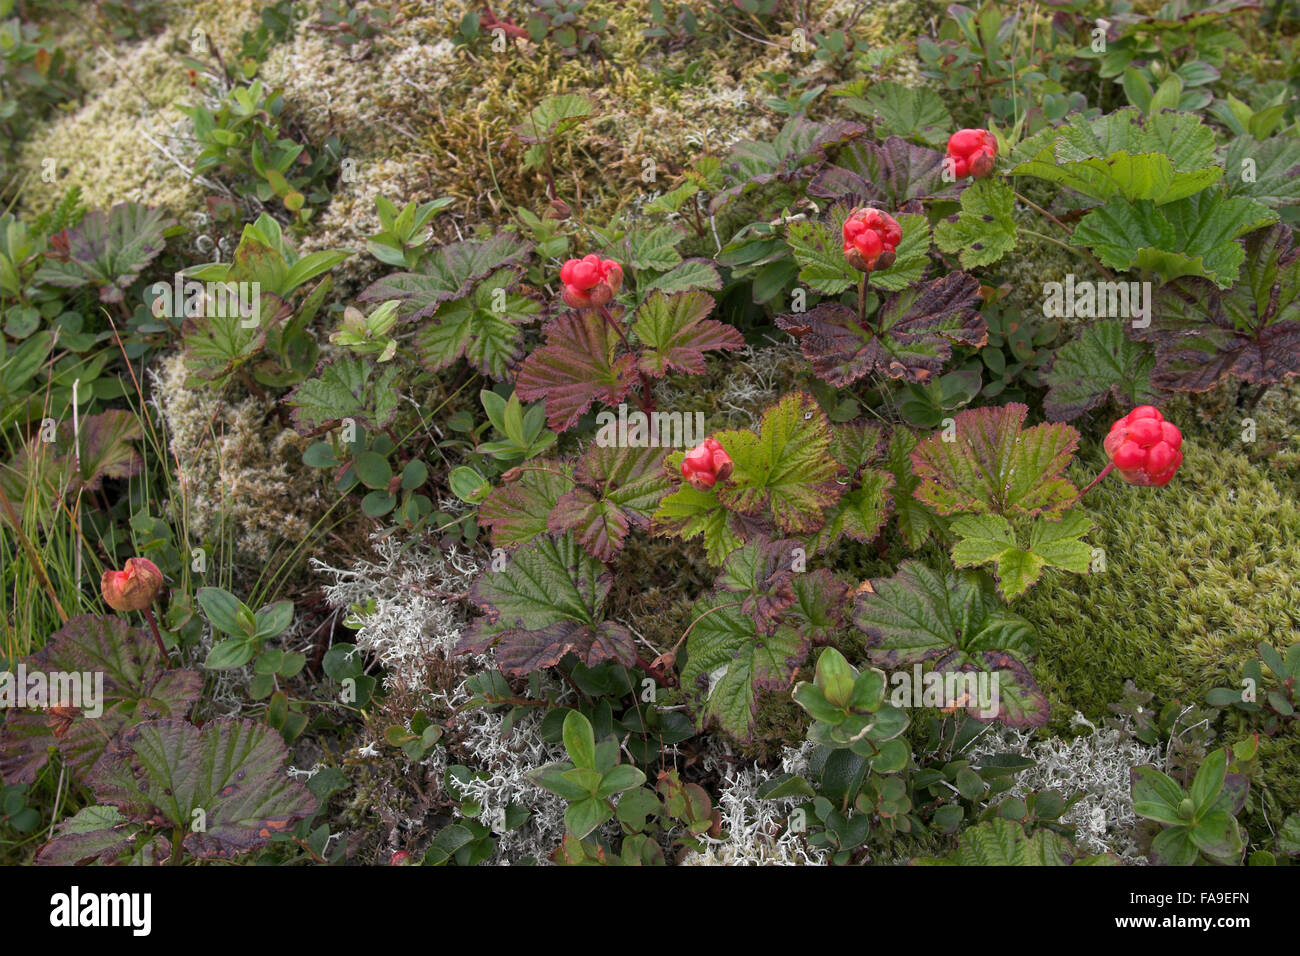 Cloudberry, bakeapple, knotberry, knoutberry, Moltebeere, Molte-Beere, Multebeere, Multbeere, Torfbeere, Rubus chamaemorus Stock Photo